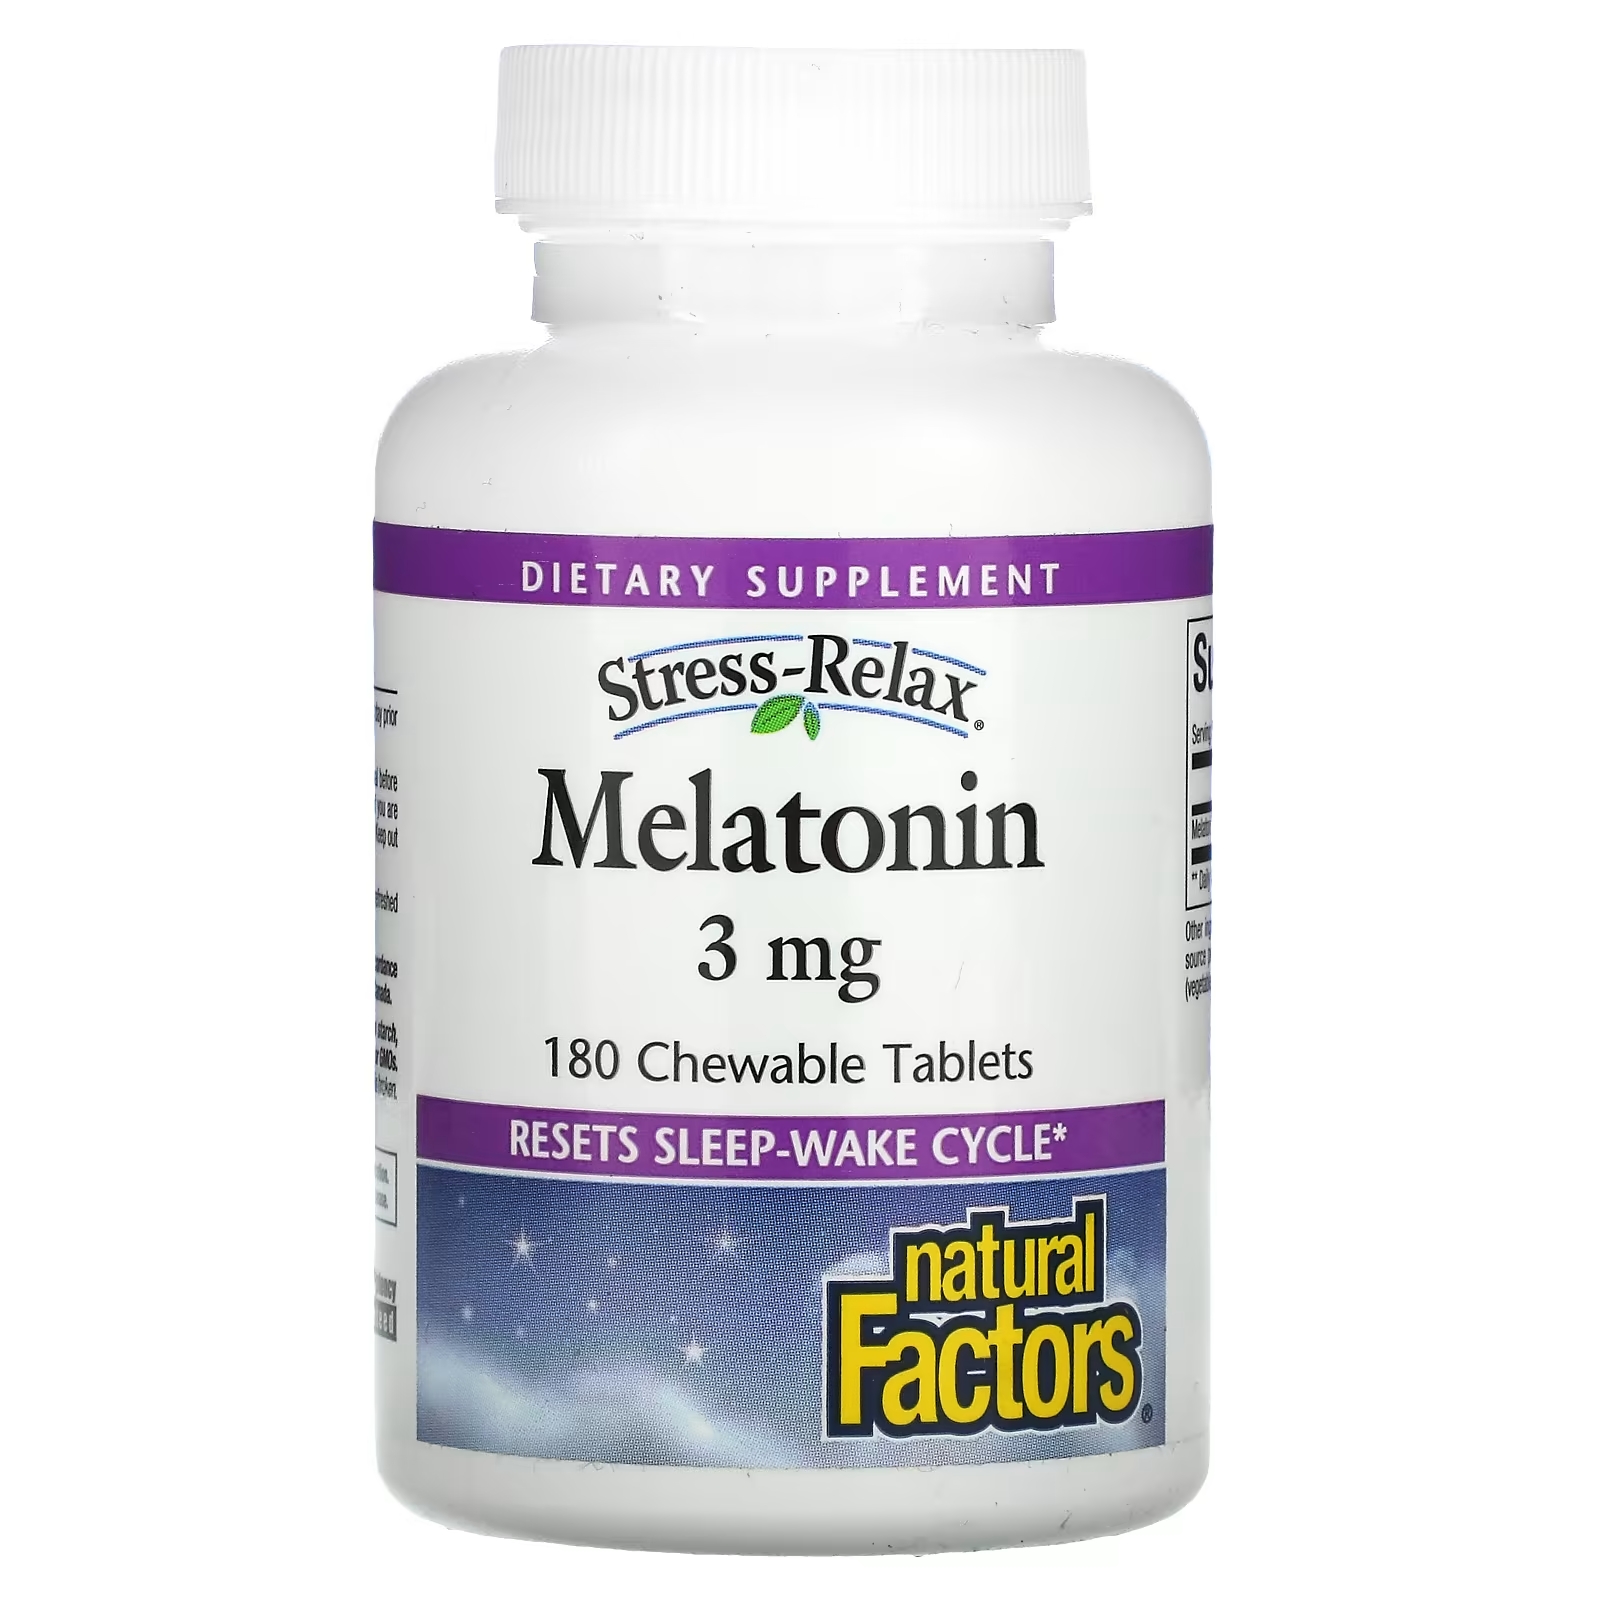 Natural Factors Stress-Relax мелатонин 3 мг, 180 жевательных таблеток natural factors stress relax мелатонин 3 мг 180 жевательных таблеток